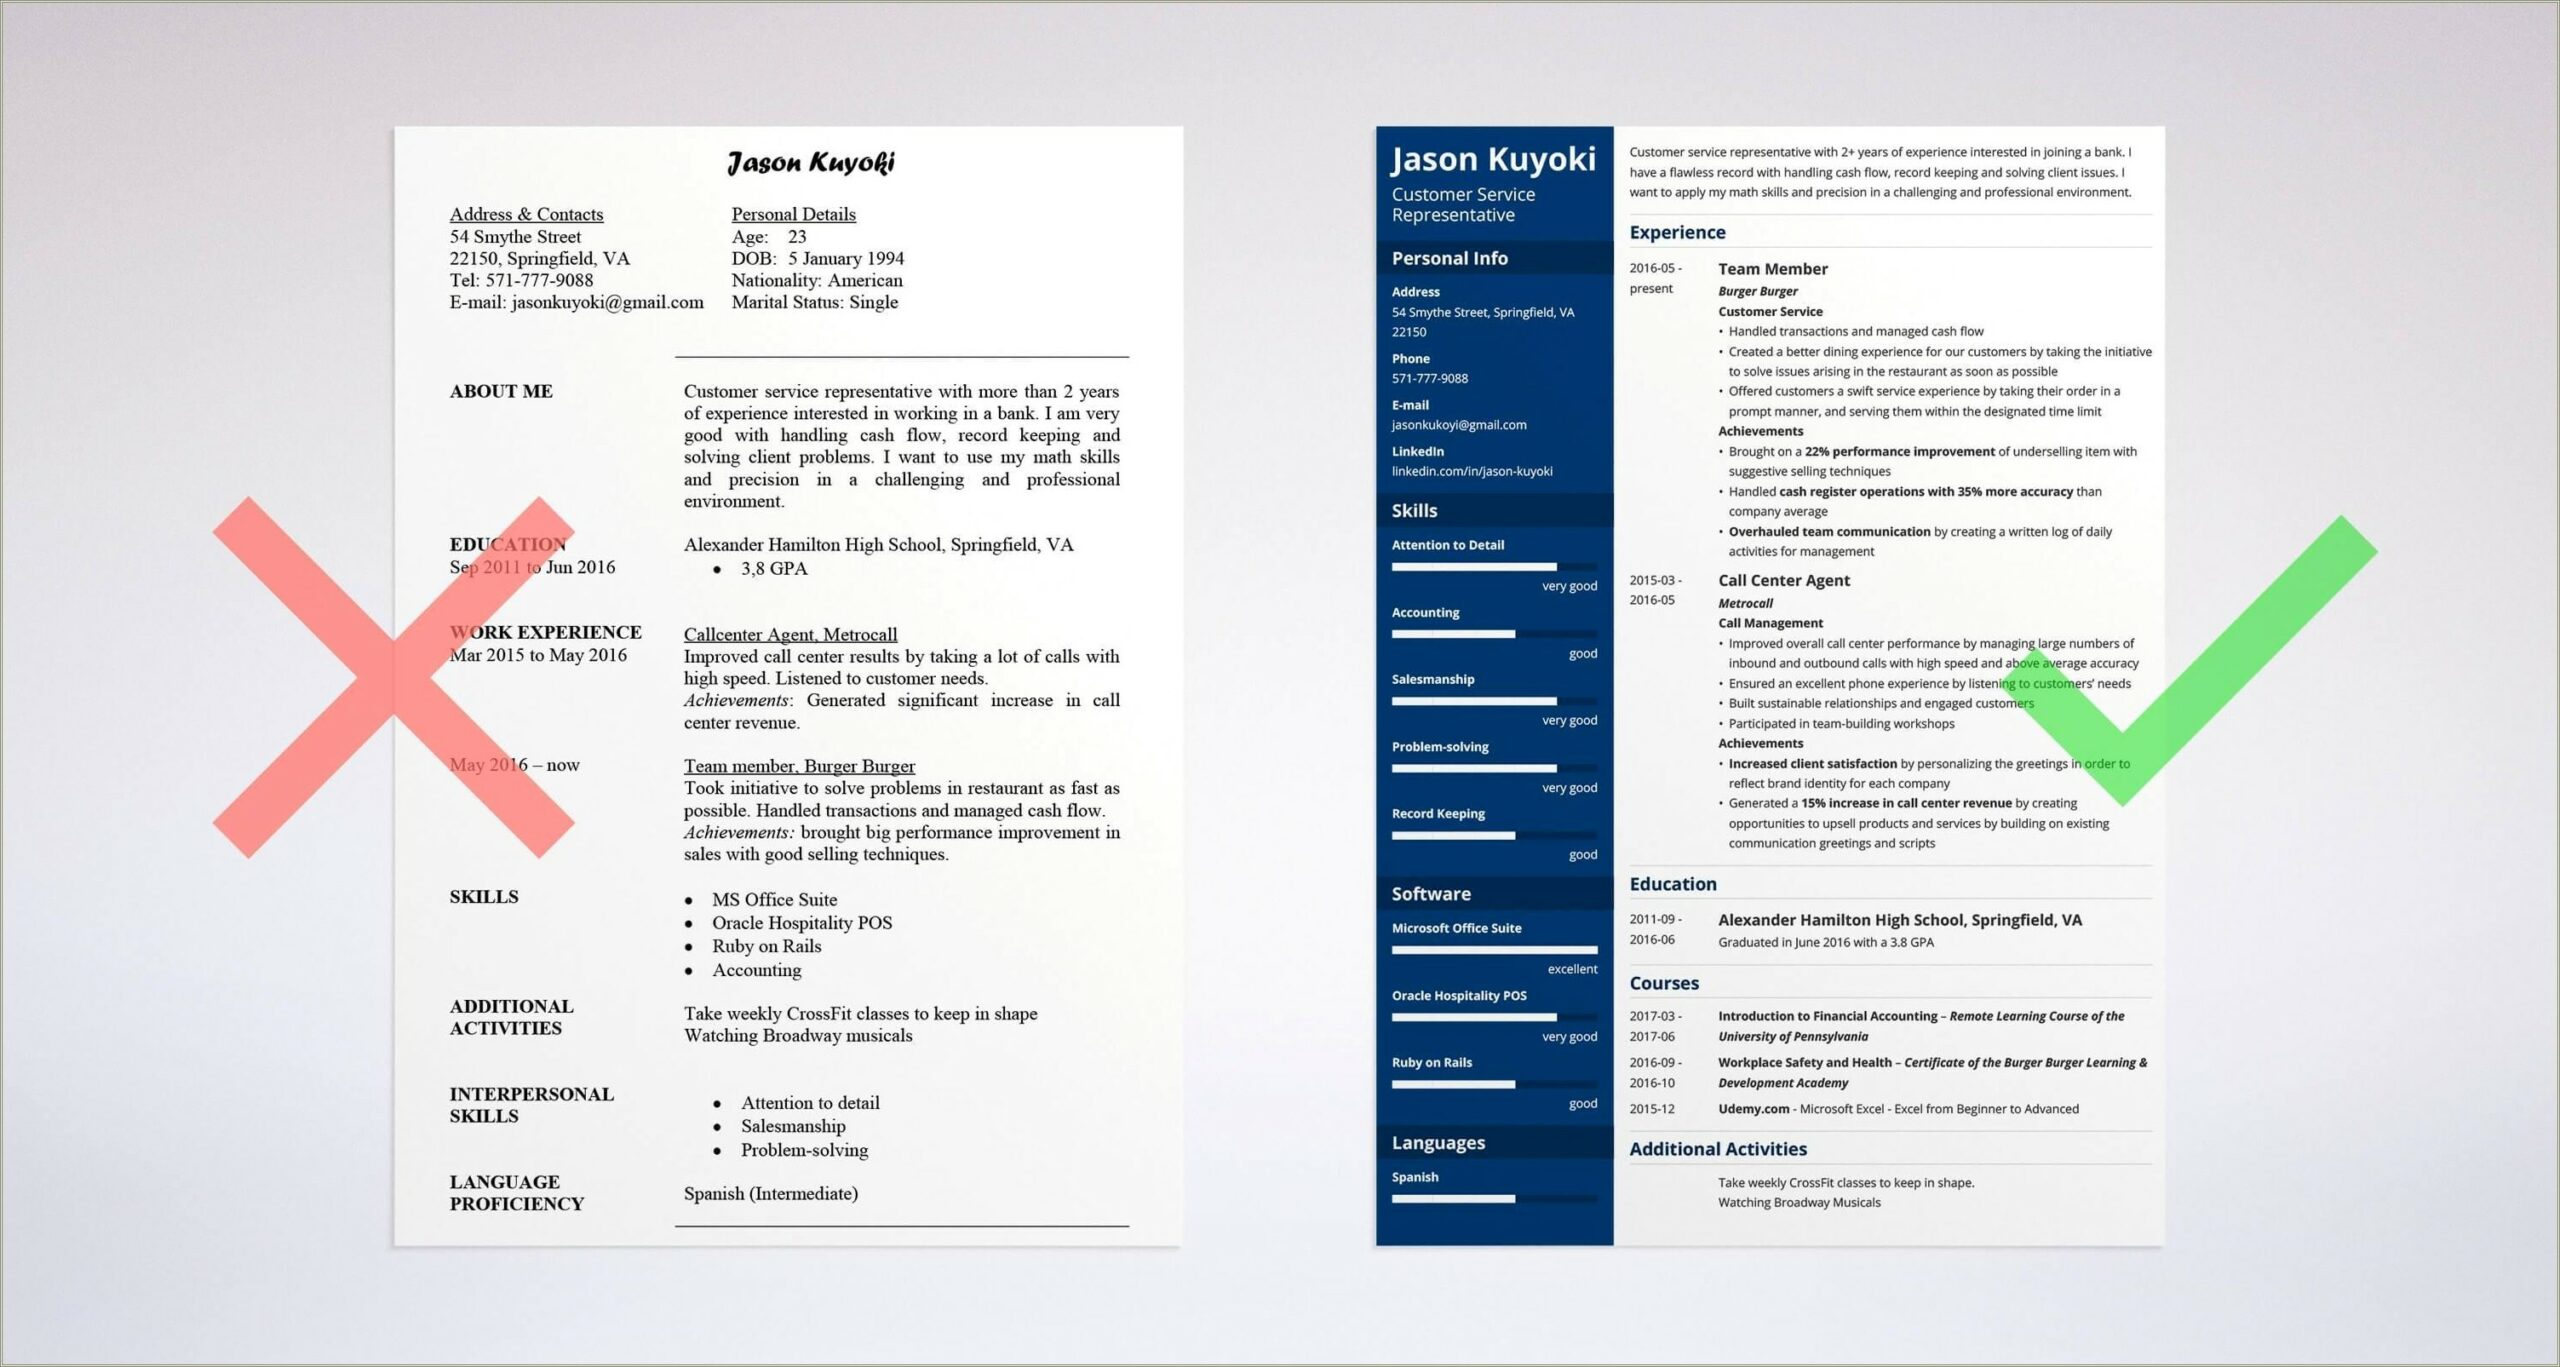 Sample Job Description Bank Teller Resume